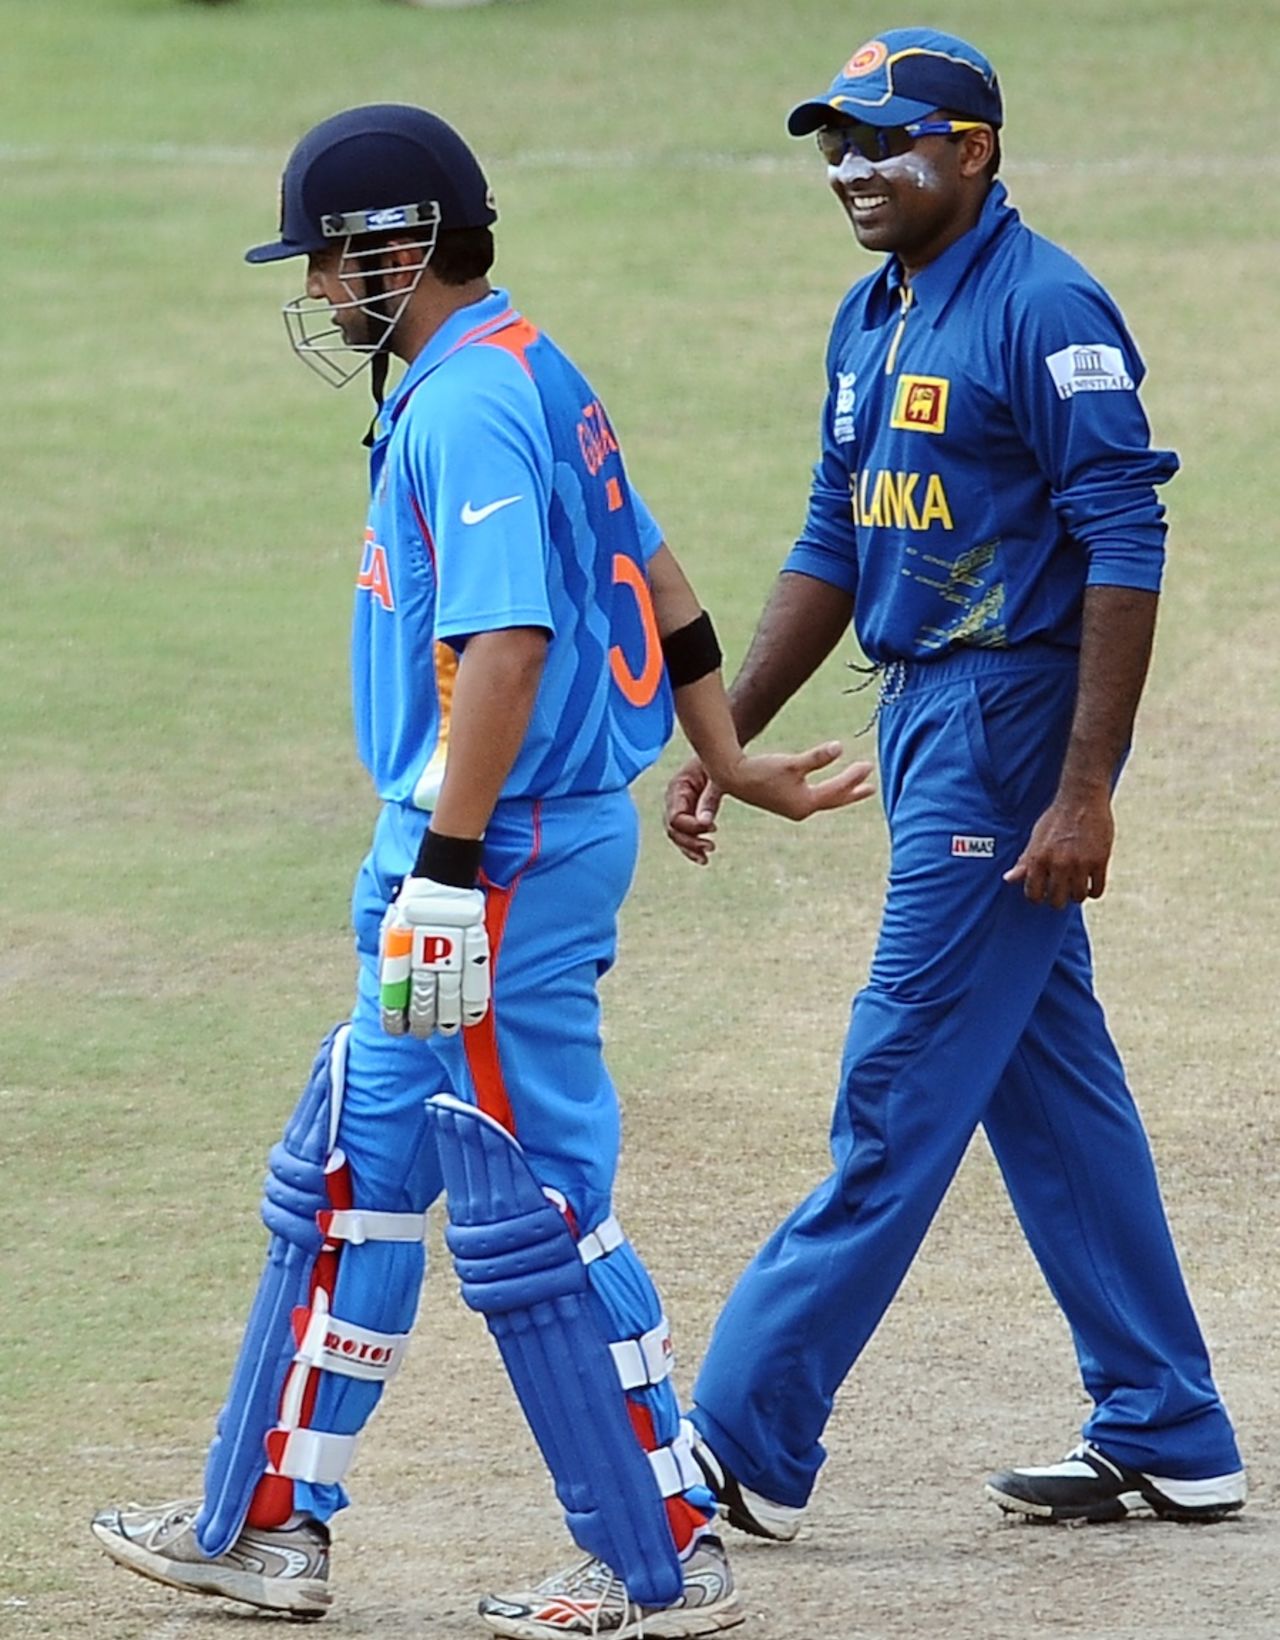 Gautam Gambhir retires hurt after getting hit on the hand, Sri Lanka v India, World Twenty20 2012 warm-up, Colombo, September 15, 2012